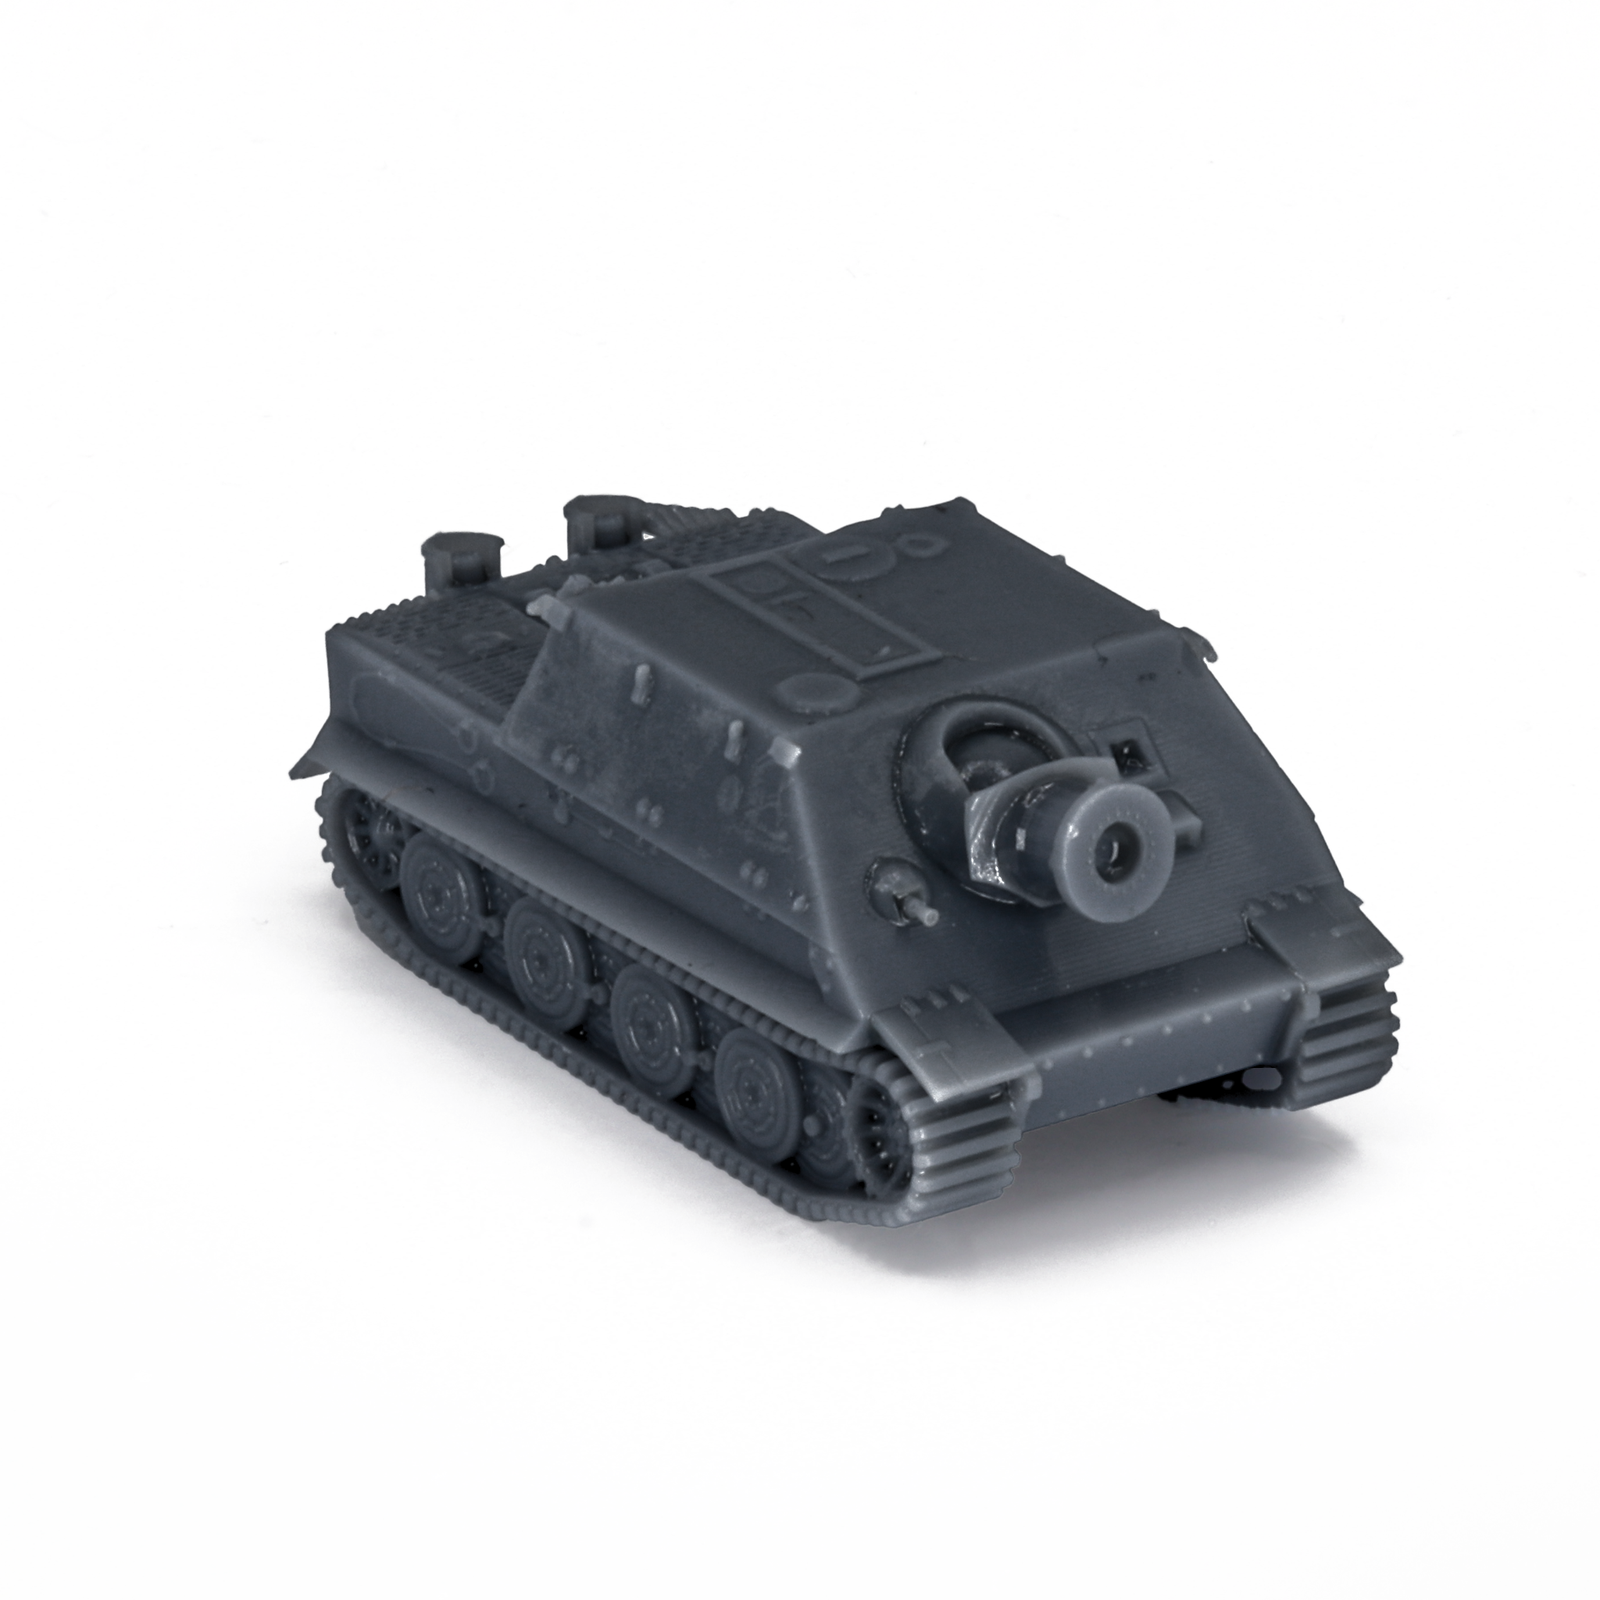 Alternate Universe Churchill Tank - Infantry Tank A20 Chamberlain :  r/SprocketTankDesign